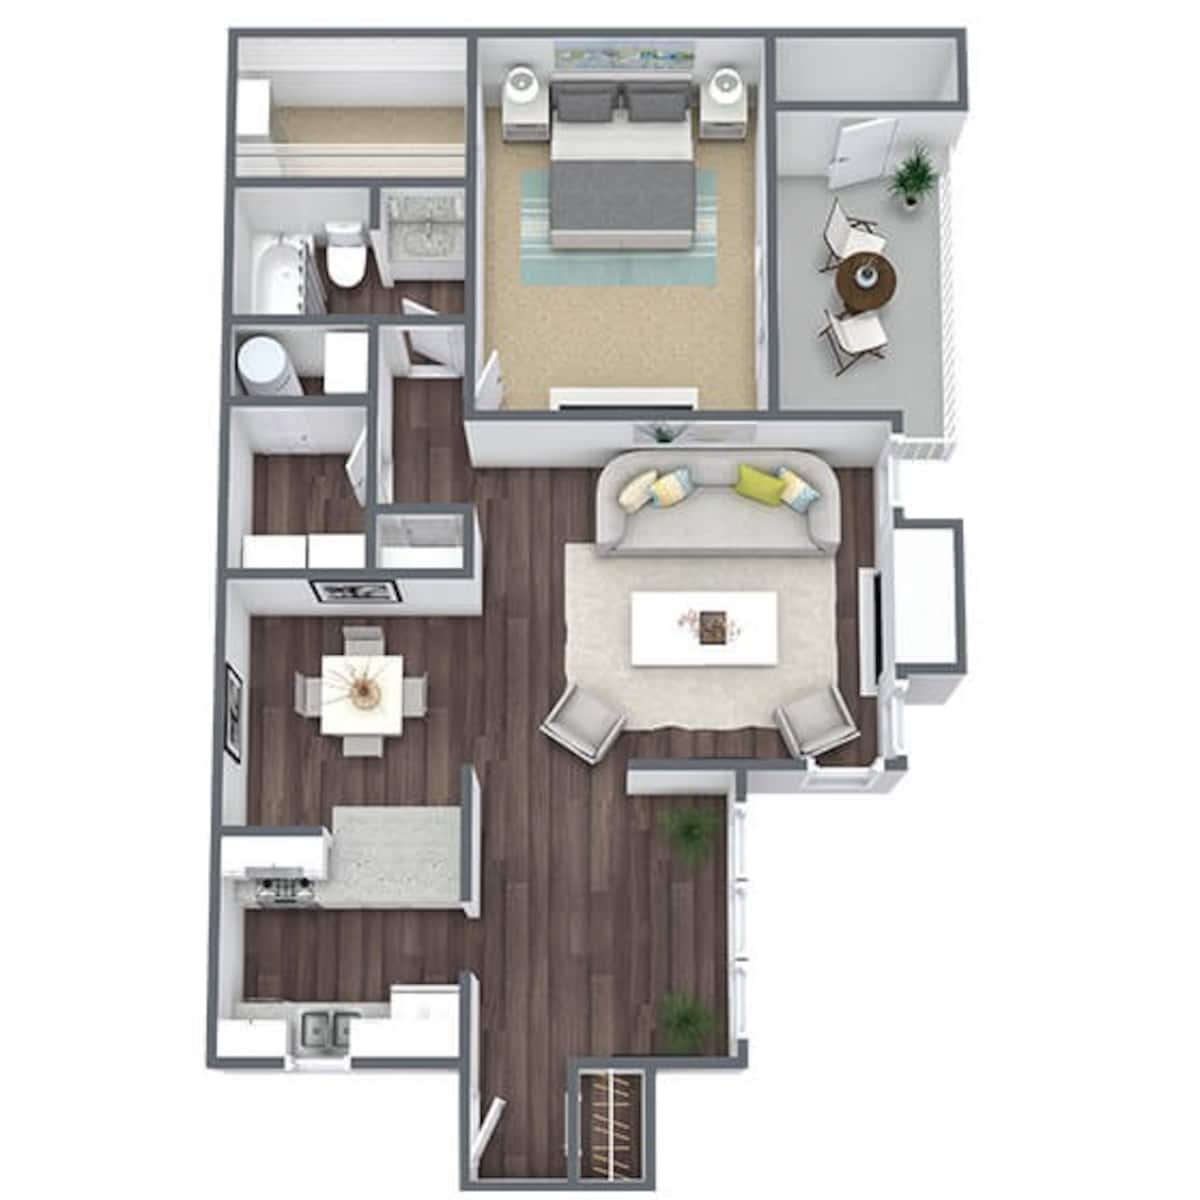 Floorplan diagram for A5 | Cypress, showing 1 bedroom